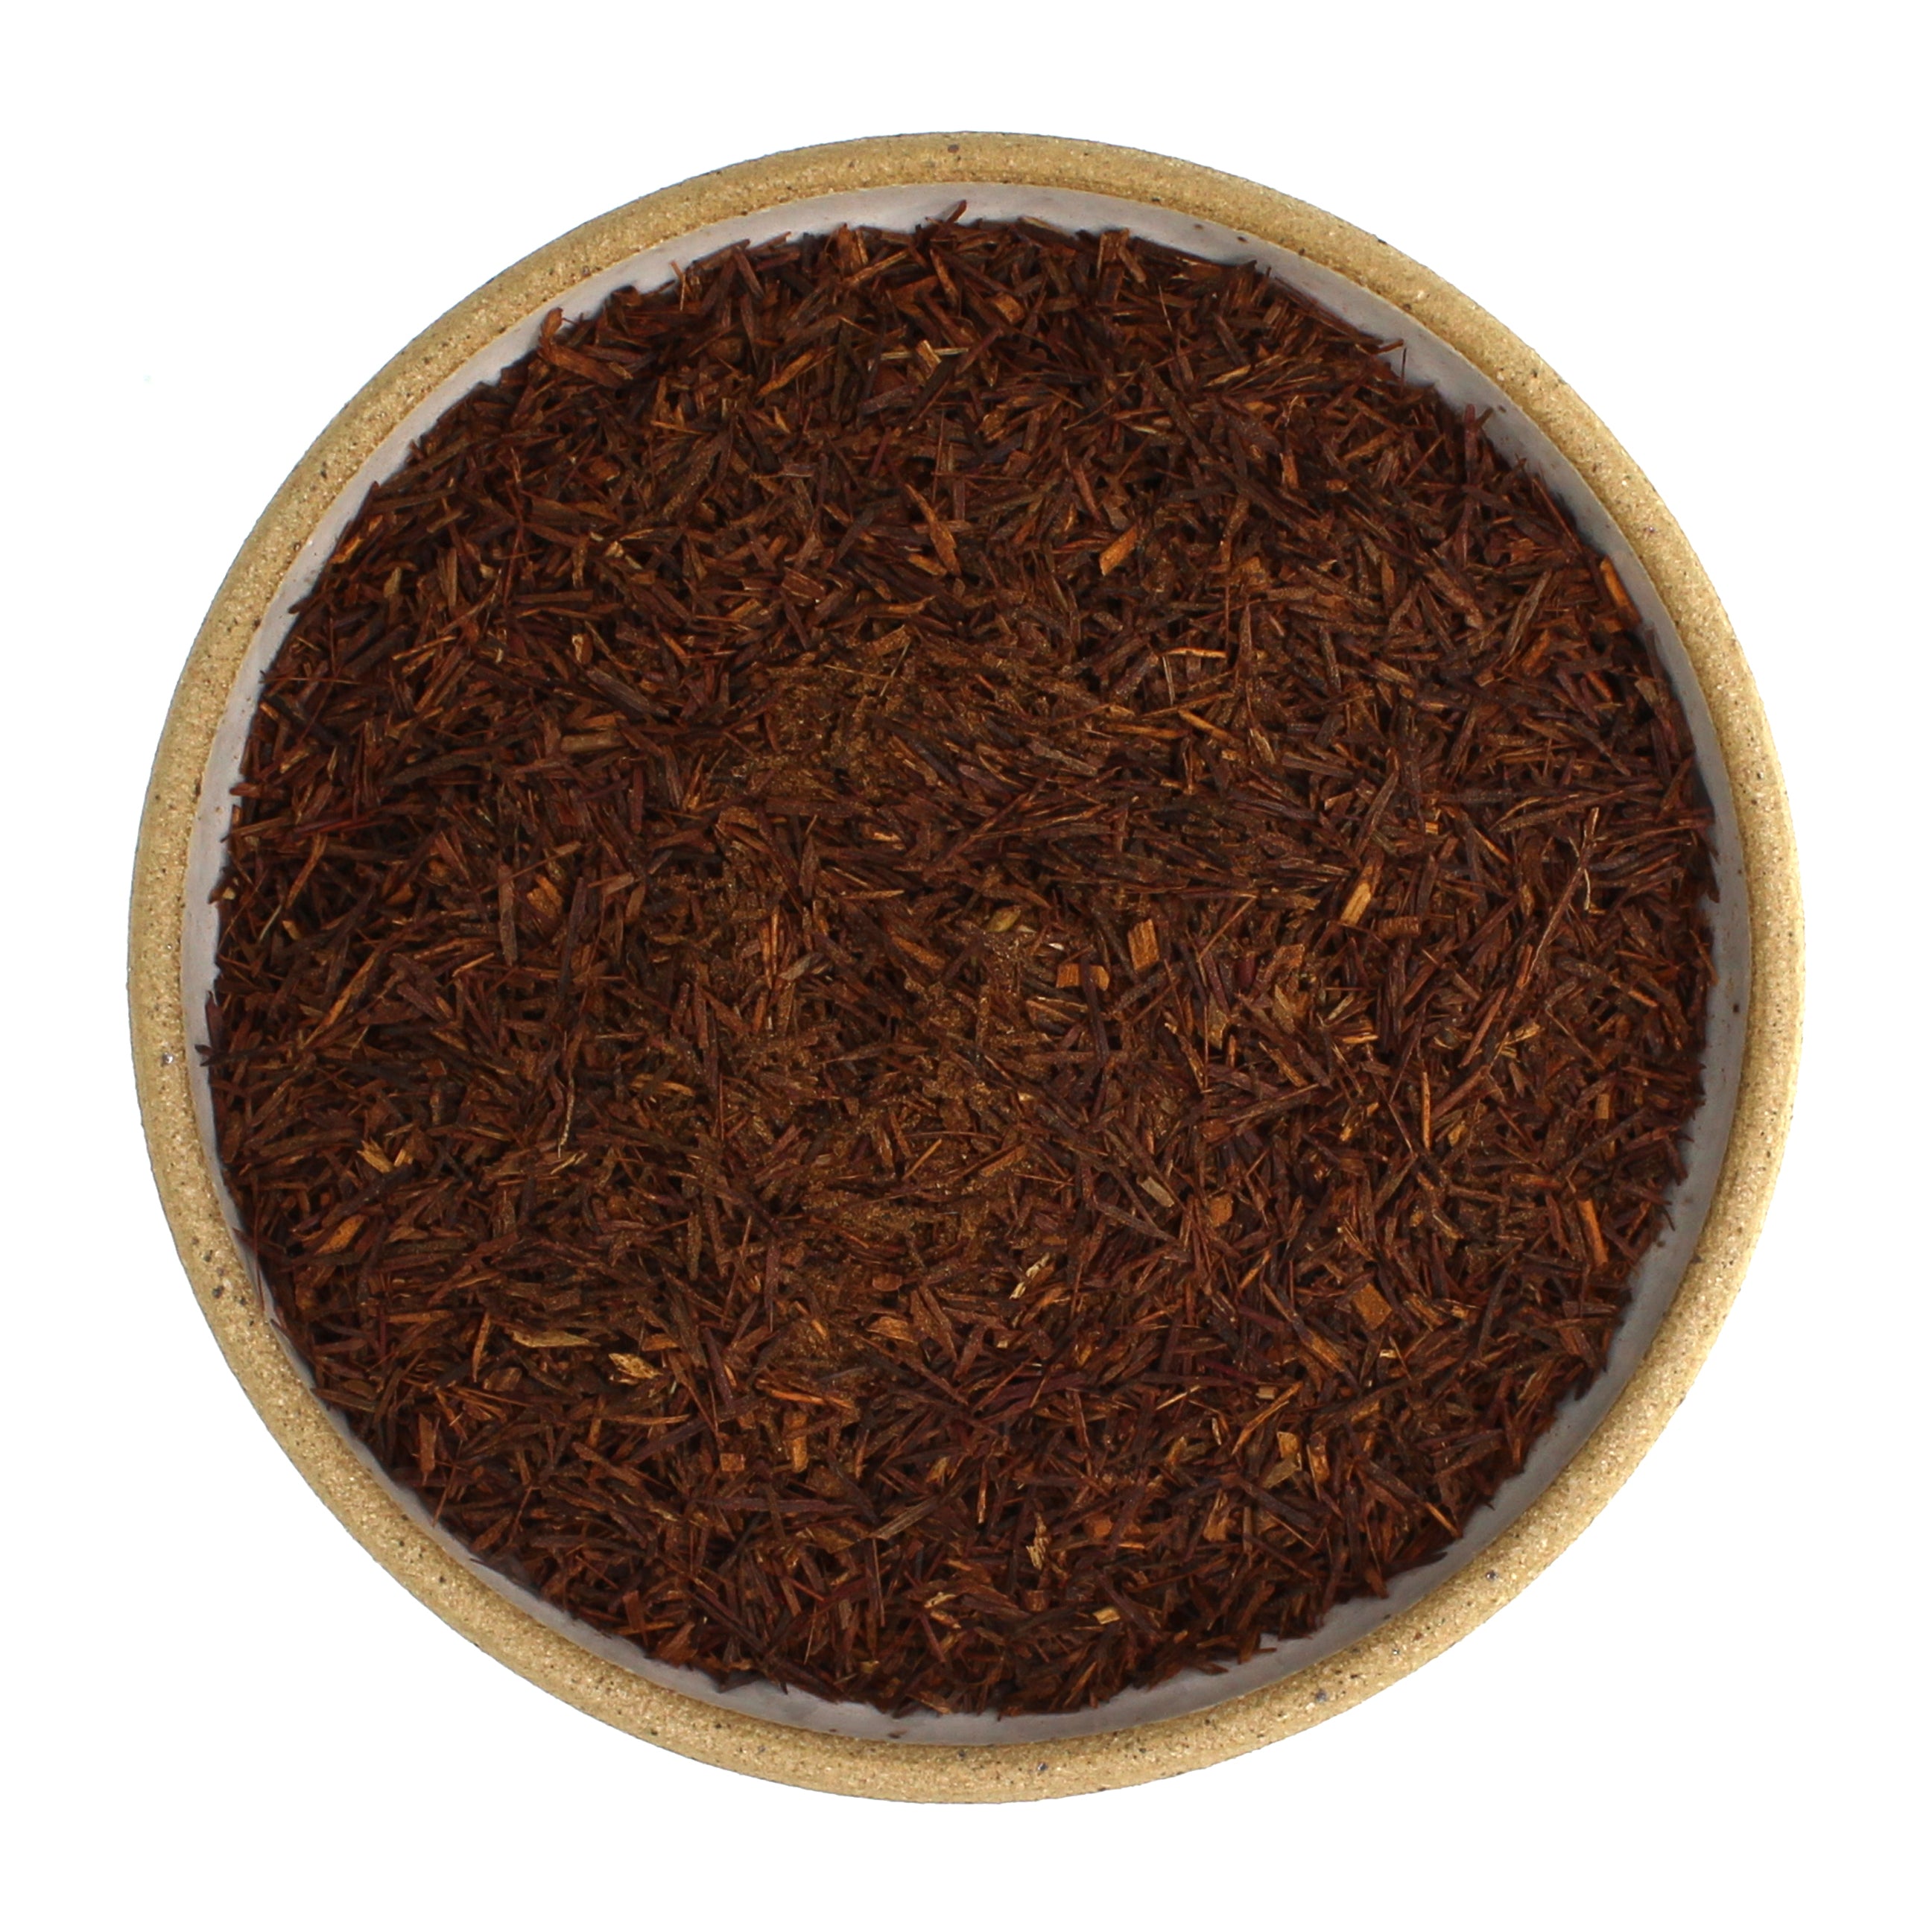 Horchata Rooibos – Old Barrel Tea Co